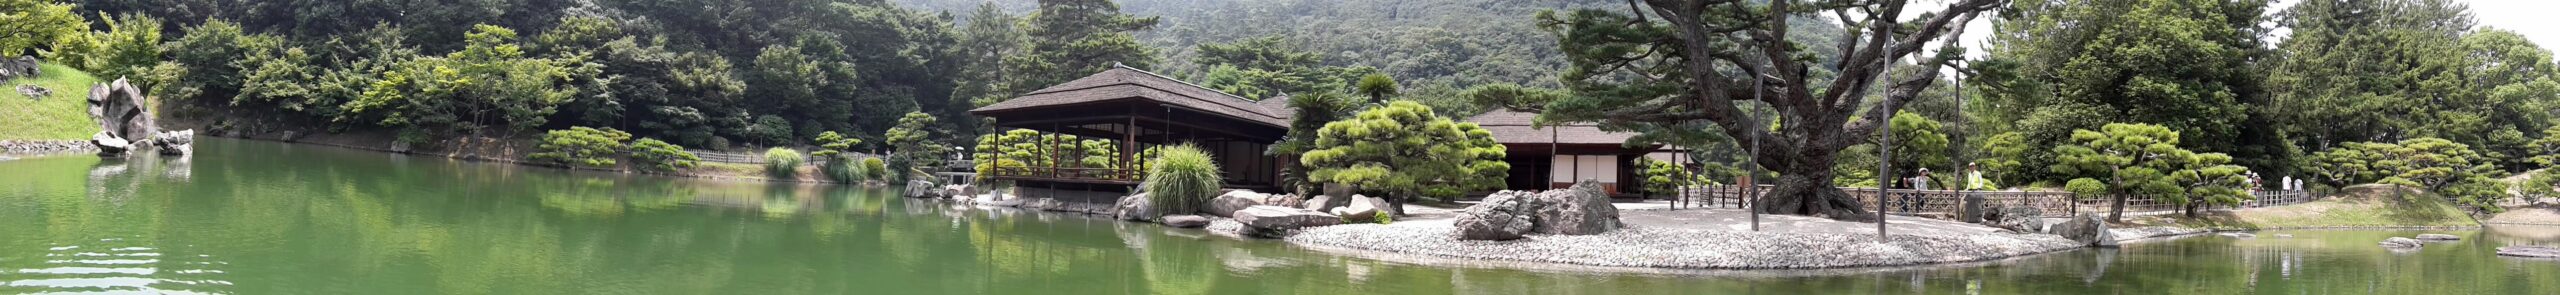 Panorama au jardin japonais Ritsurin koen